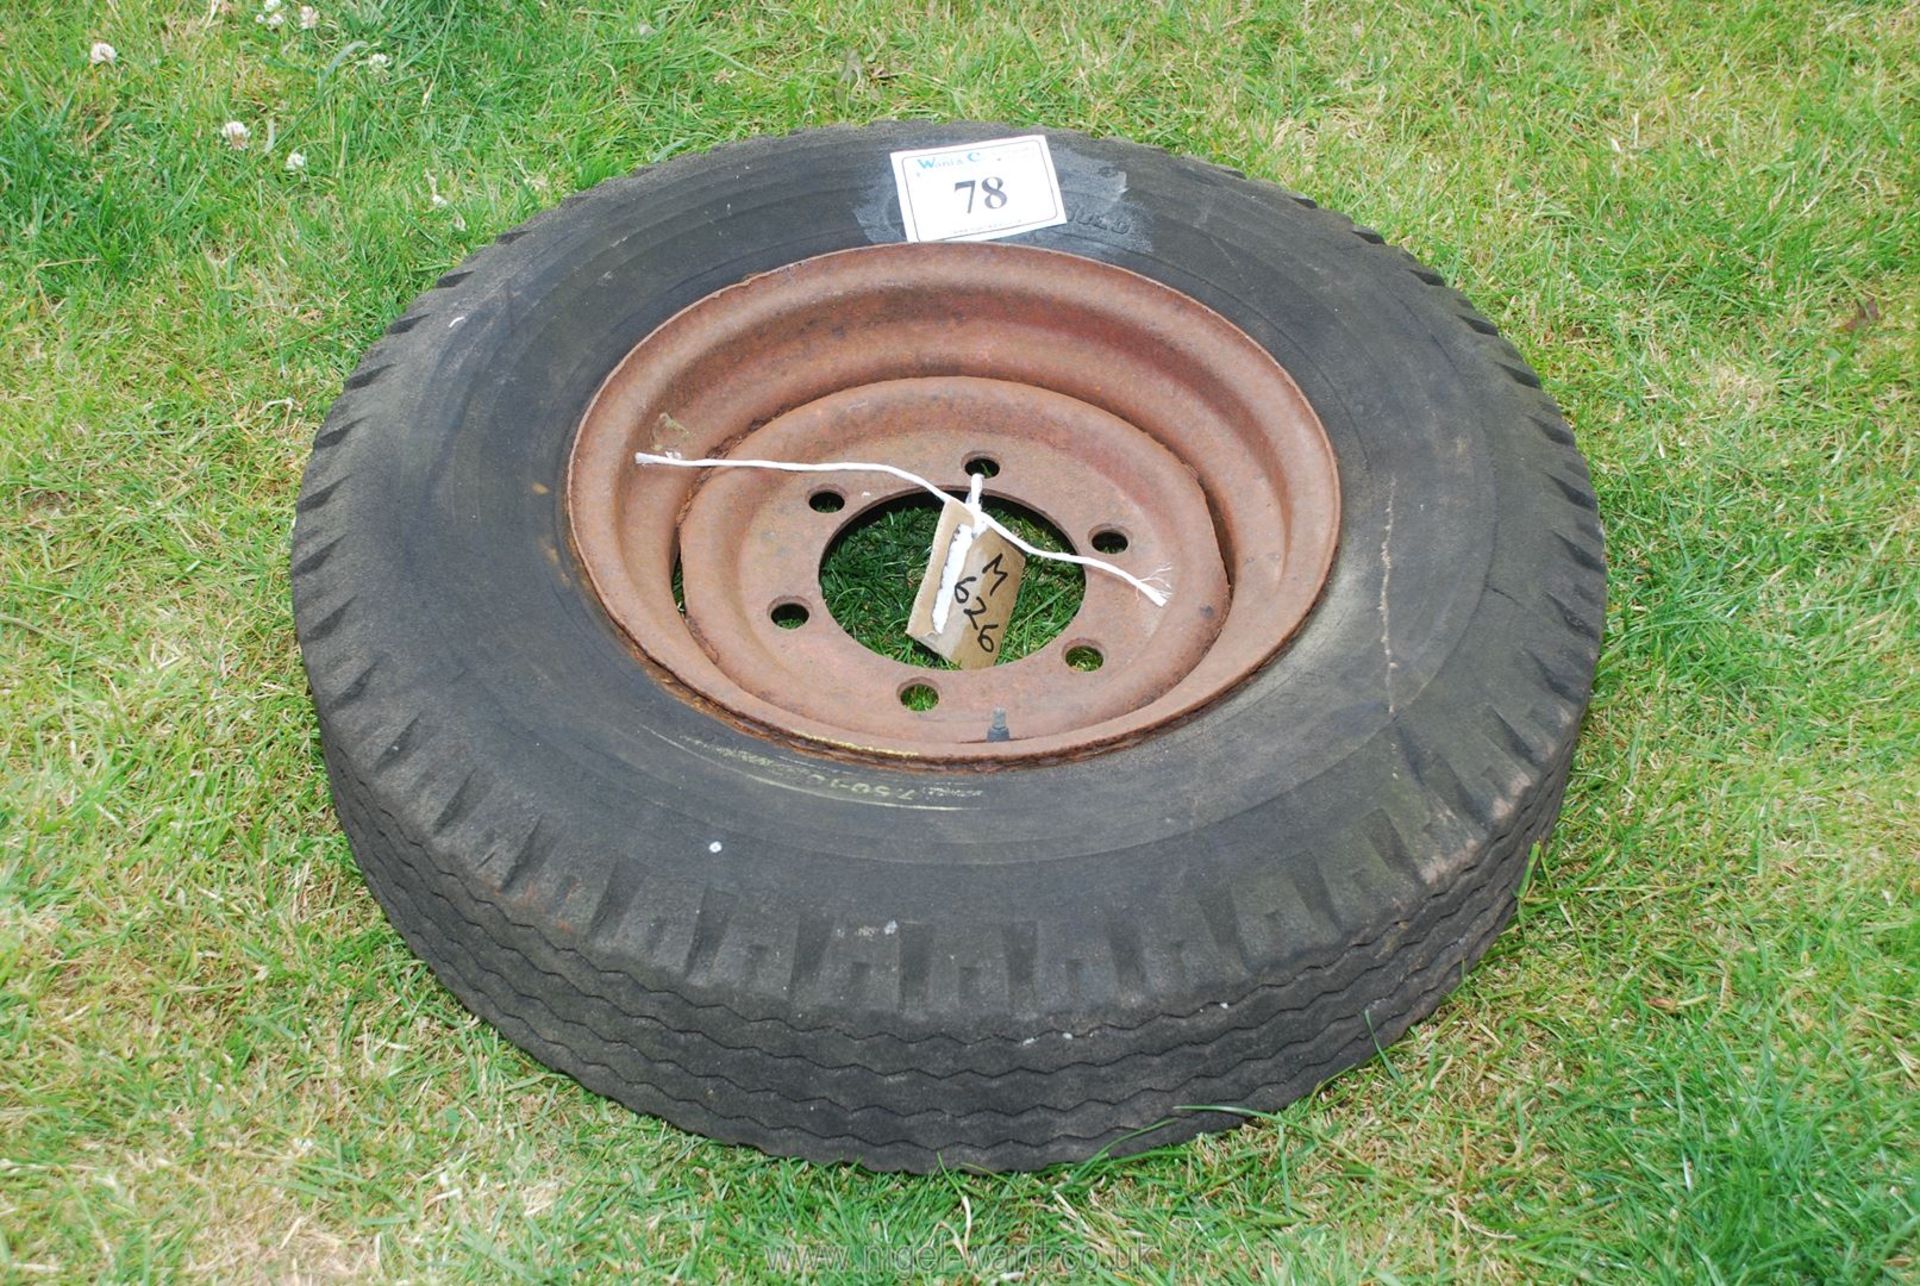 6 stud 7.50-16 wheel and tyre.